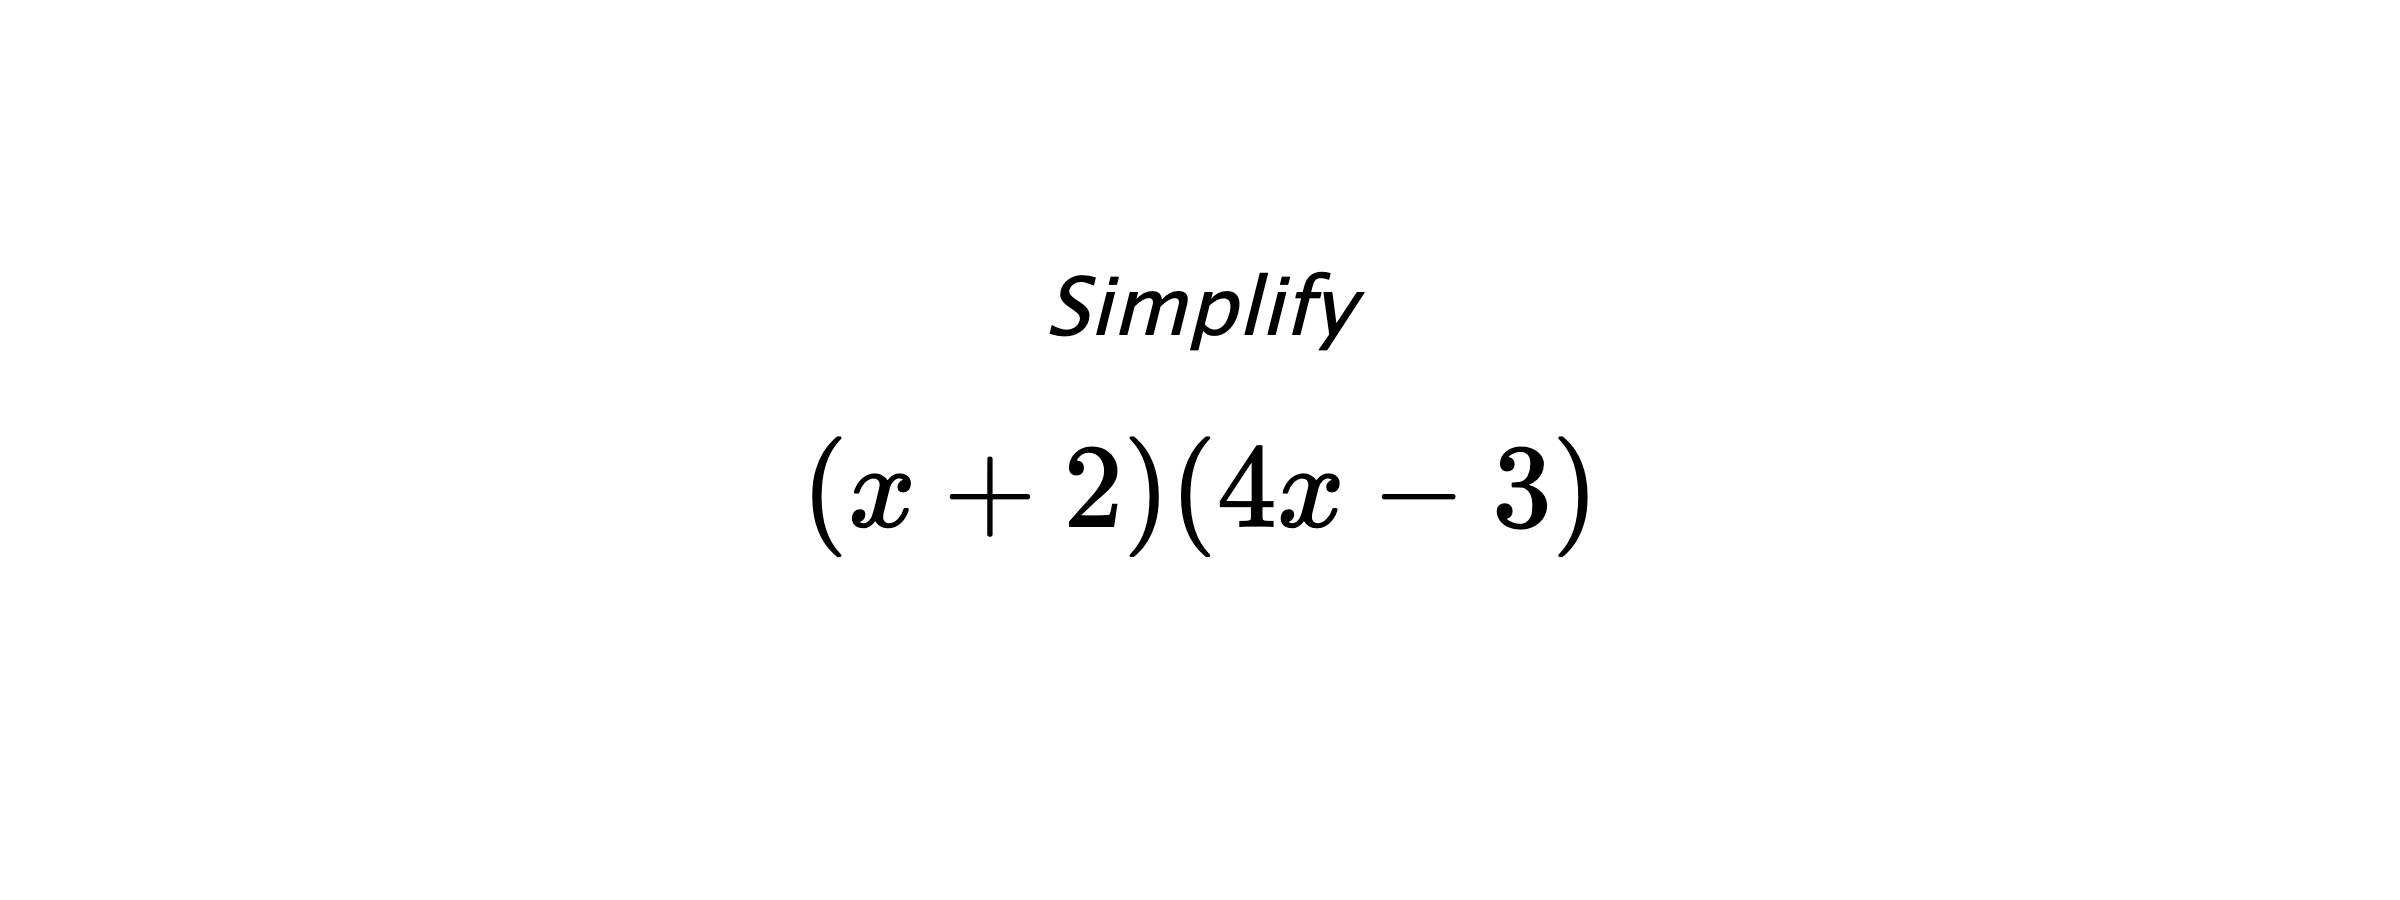 Simplify $$ \left(x+2) (4x-3\right) $$